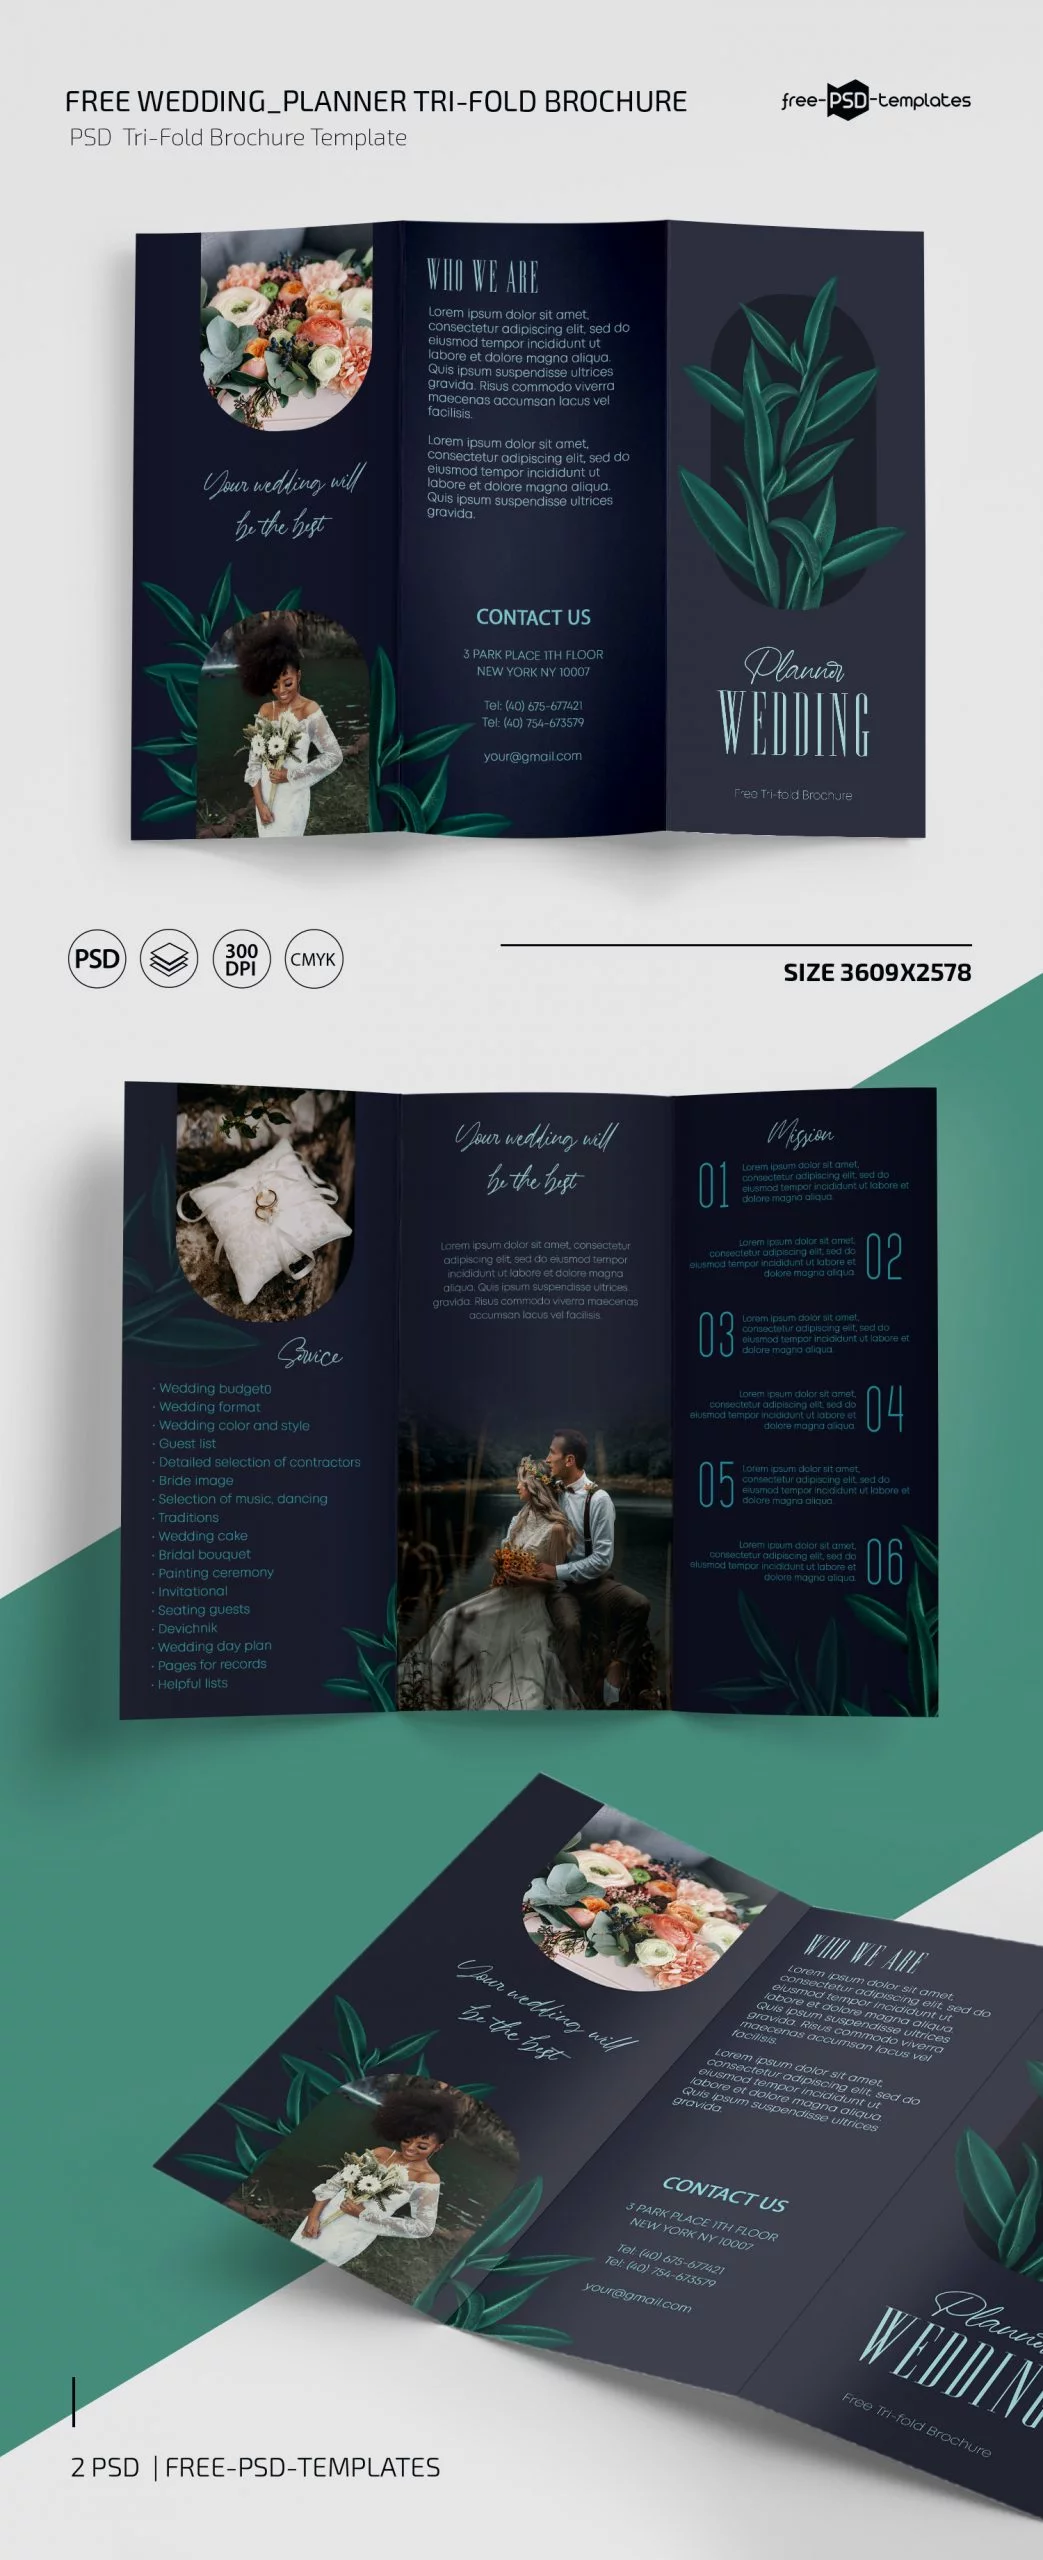 Free Wedding Planner Tri-Fold Brochure Template